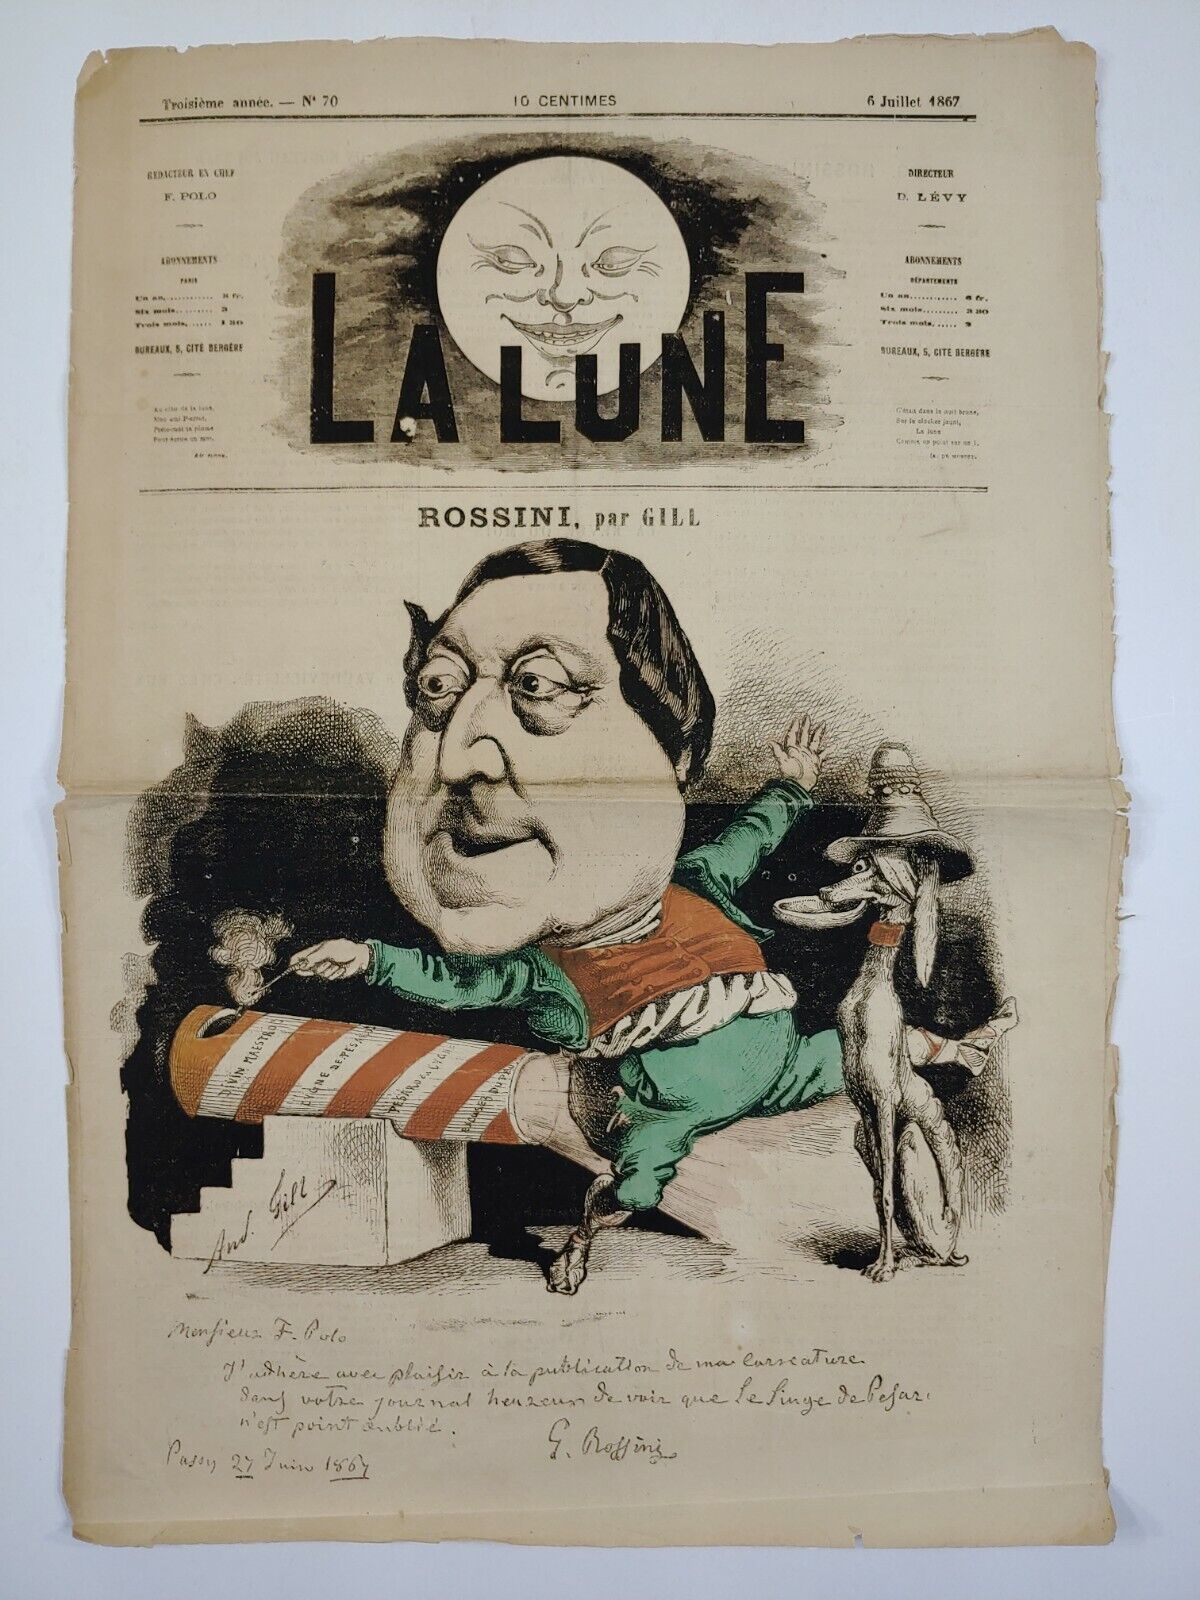 1867 JULY 6, LA LUNE NEWSPAPER -ROSSINI DRAWING, PAR GILL - FRENCH ORIGINAL